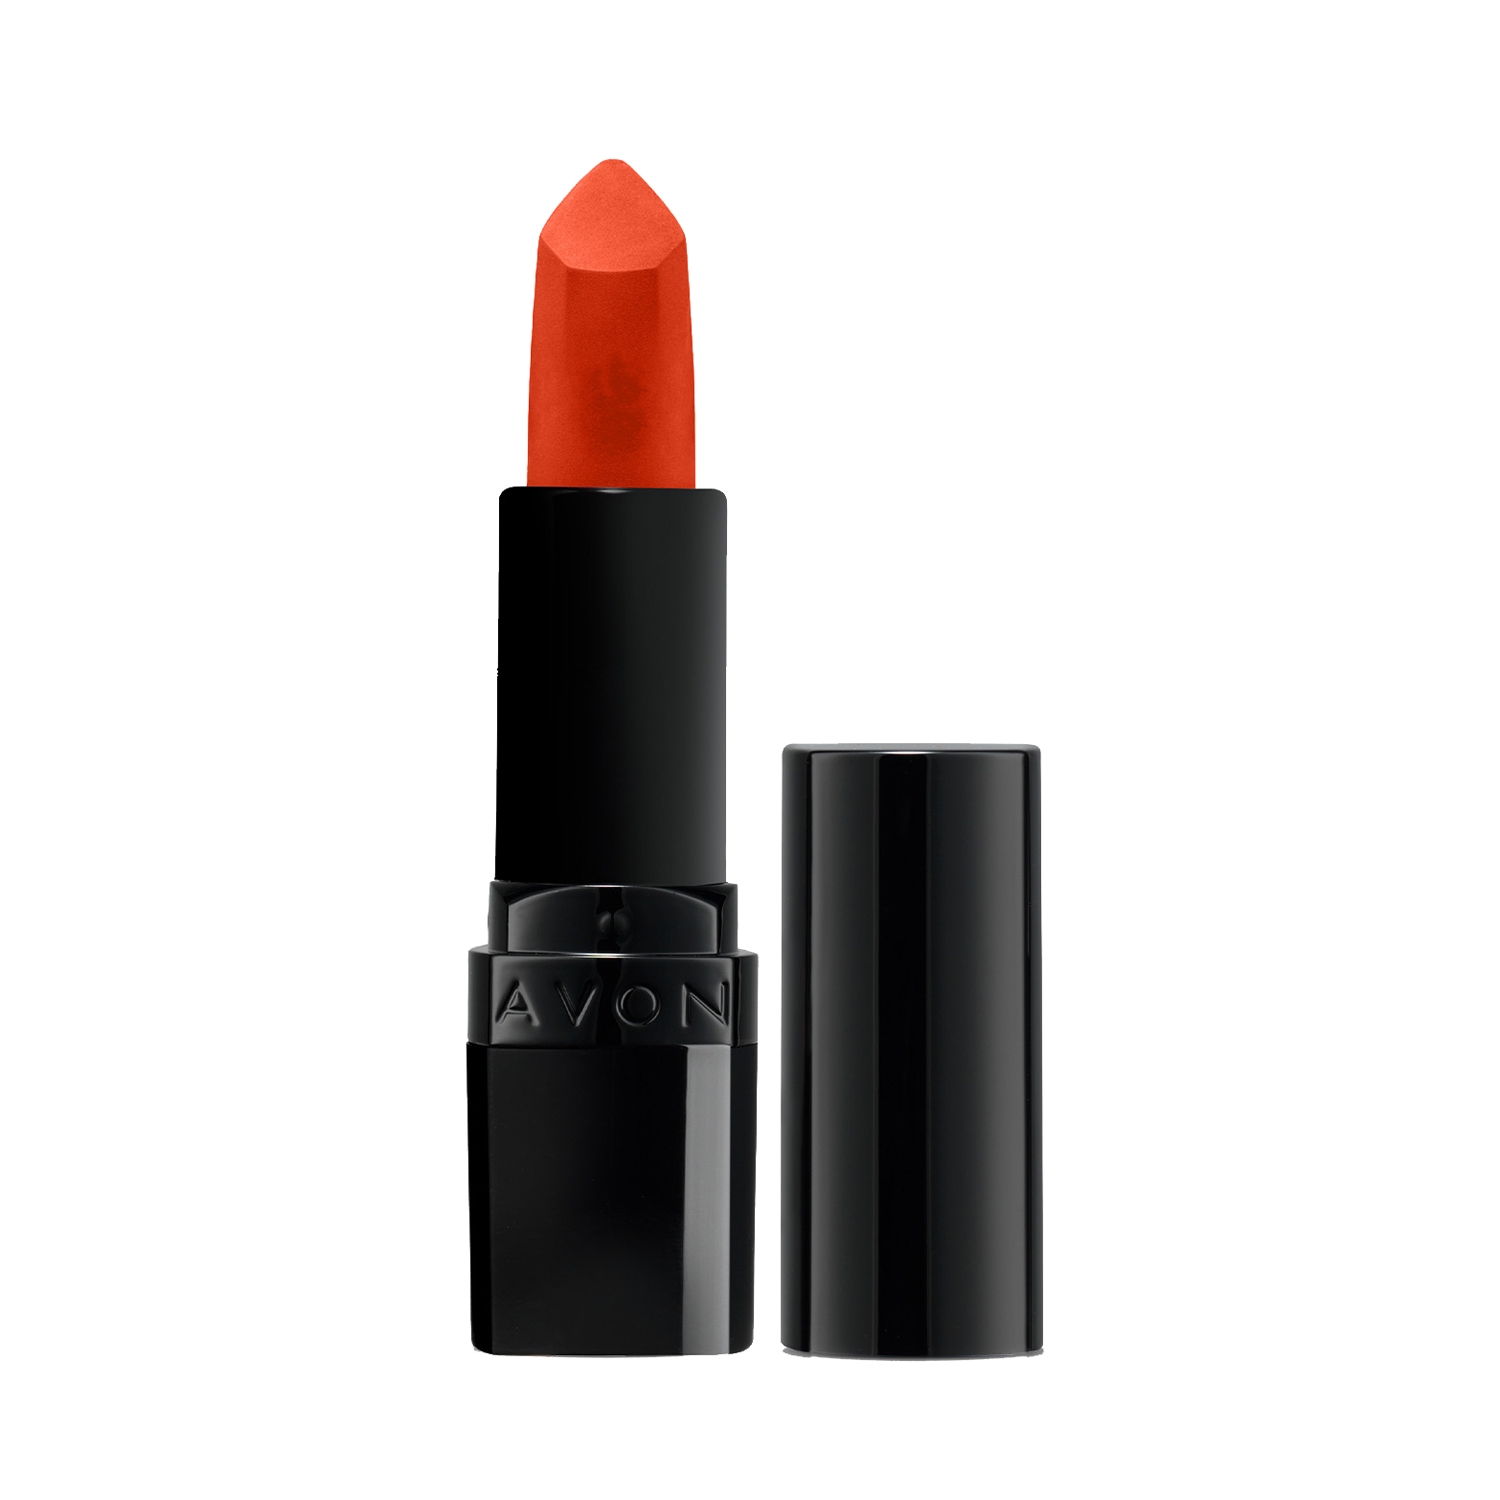 Avon | Avon Ultra Perfectly Matte Lipstick - Absolute Coral (4g)